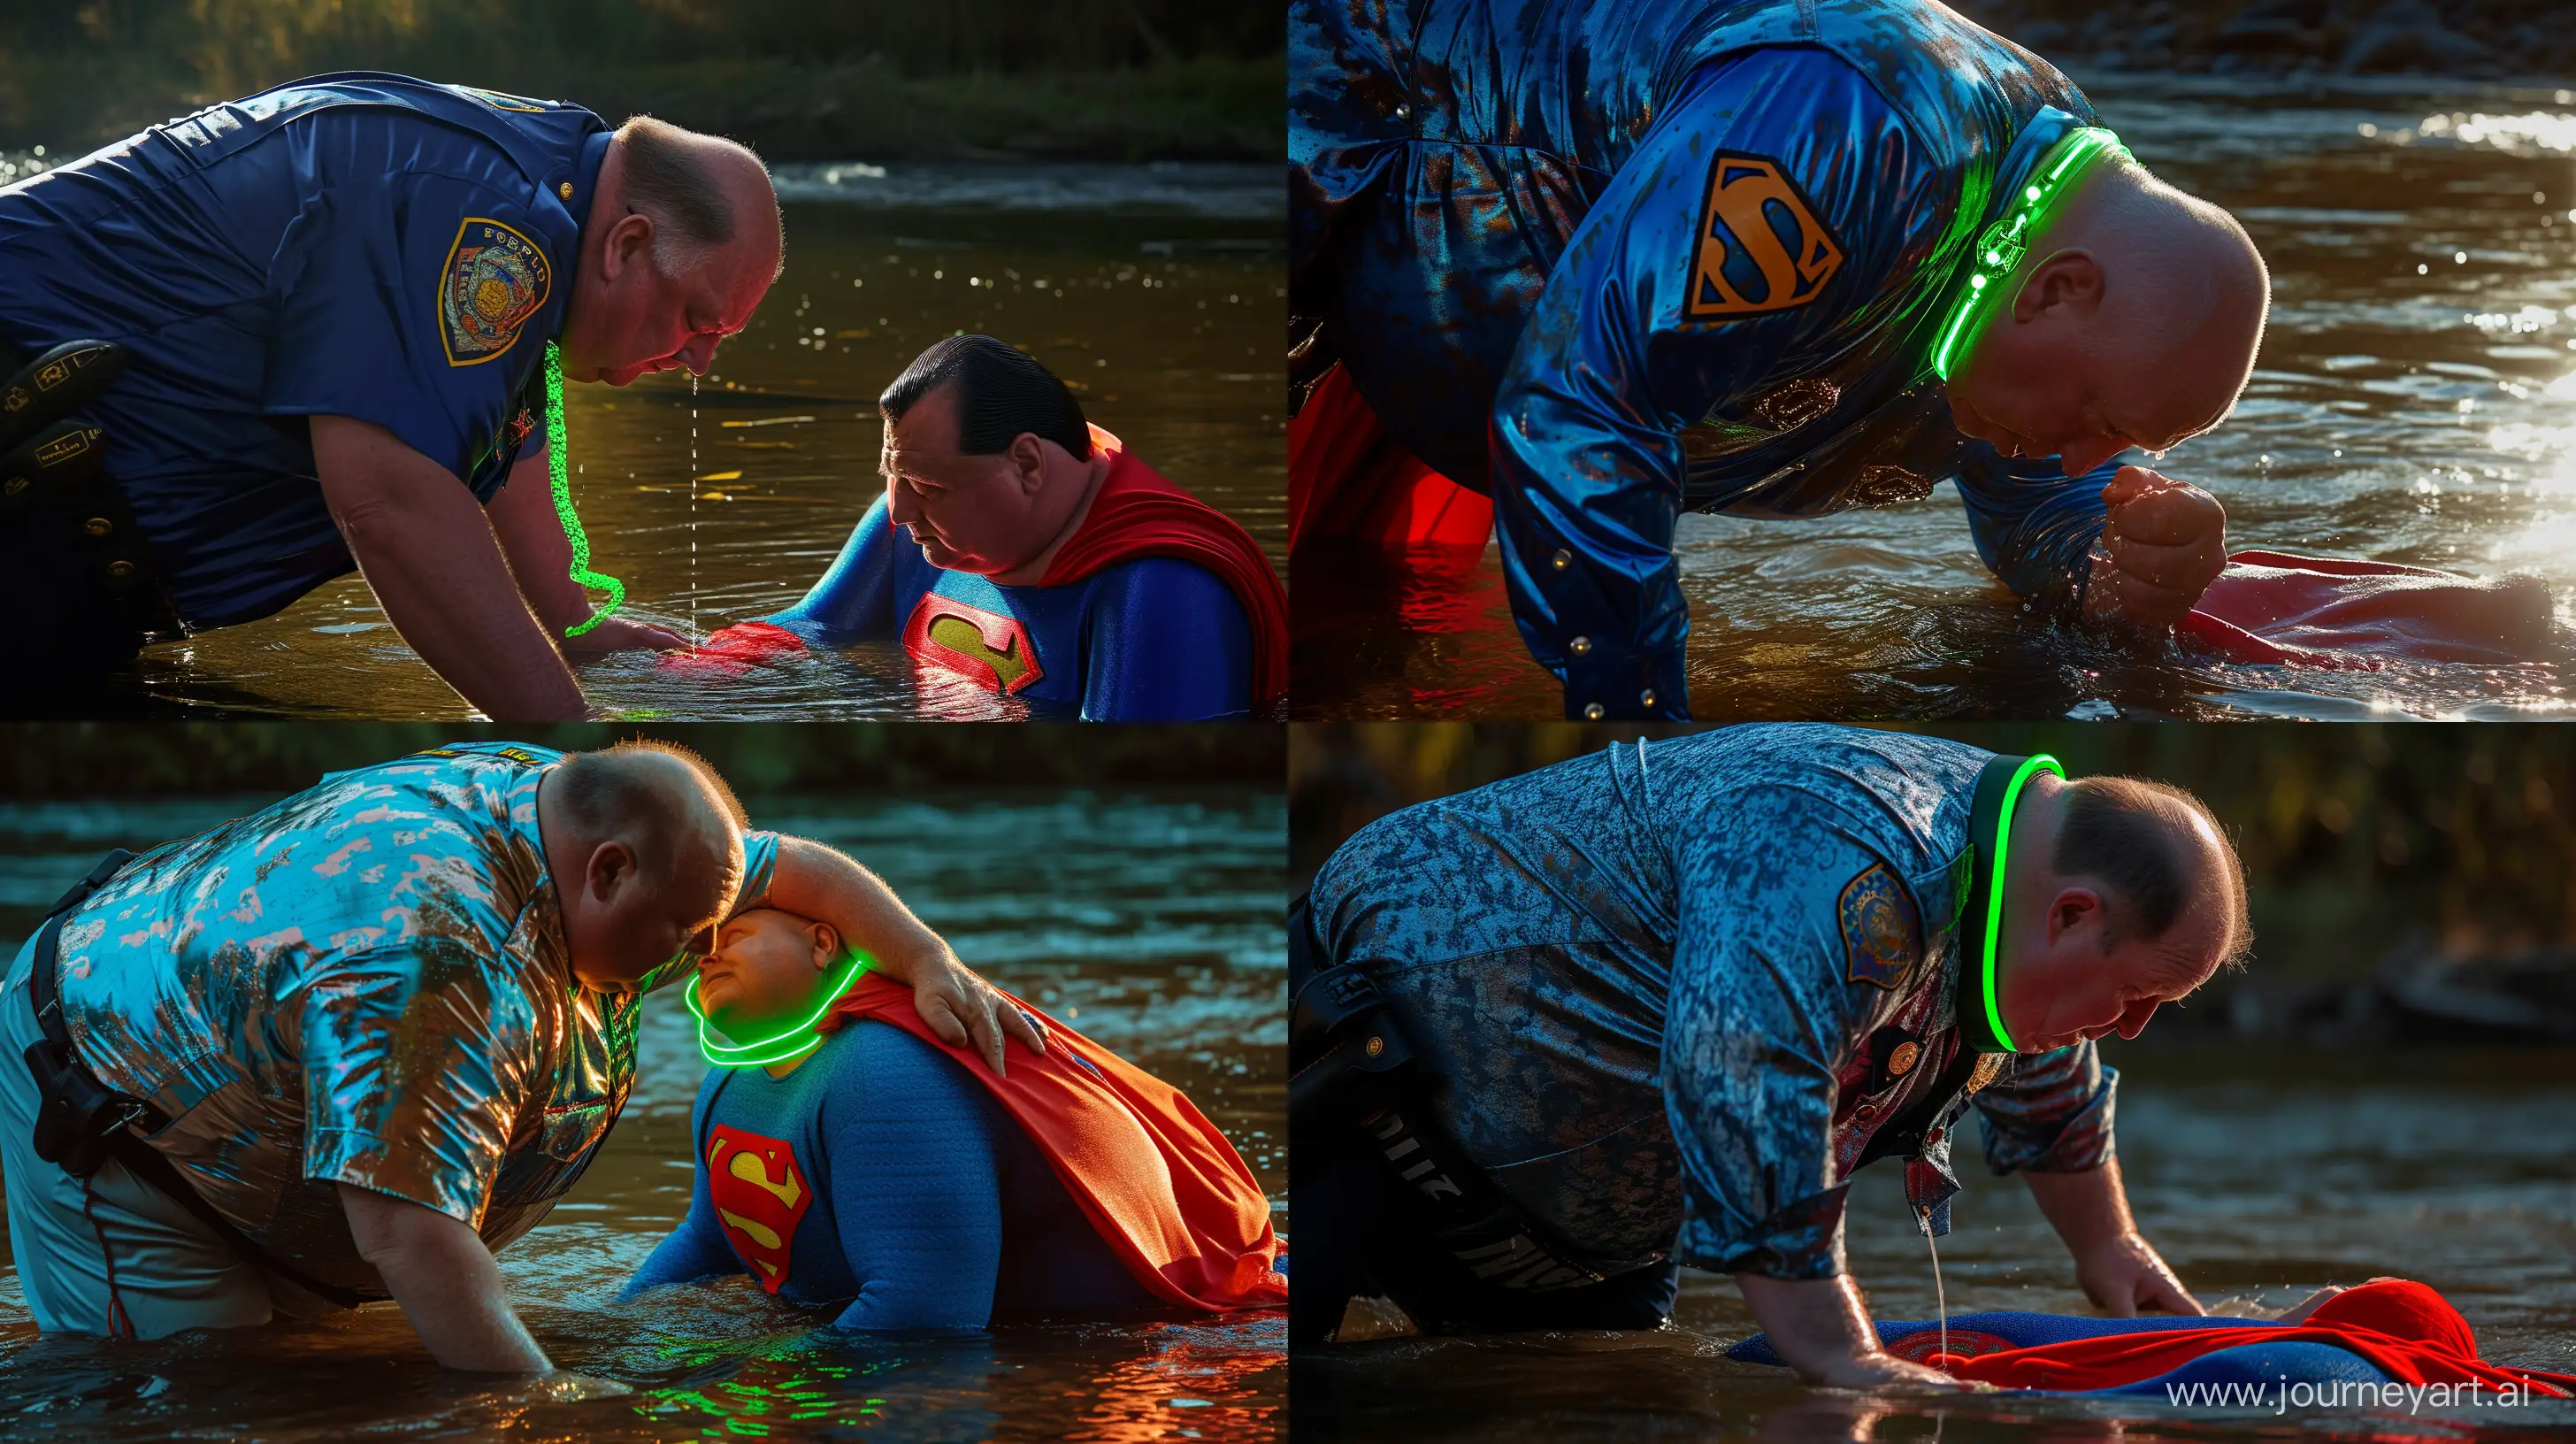 Eccentric-Scene-Elderly-Man-in-Superman-Costume-Receives-Neon-Dog-Collar-by-the-River